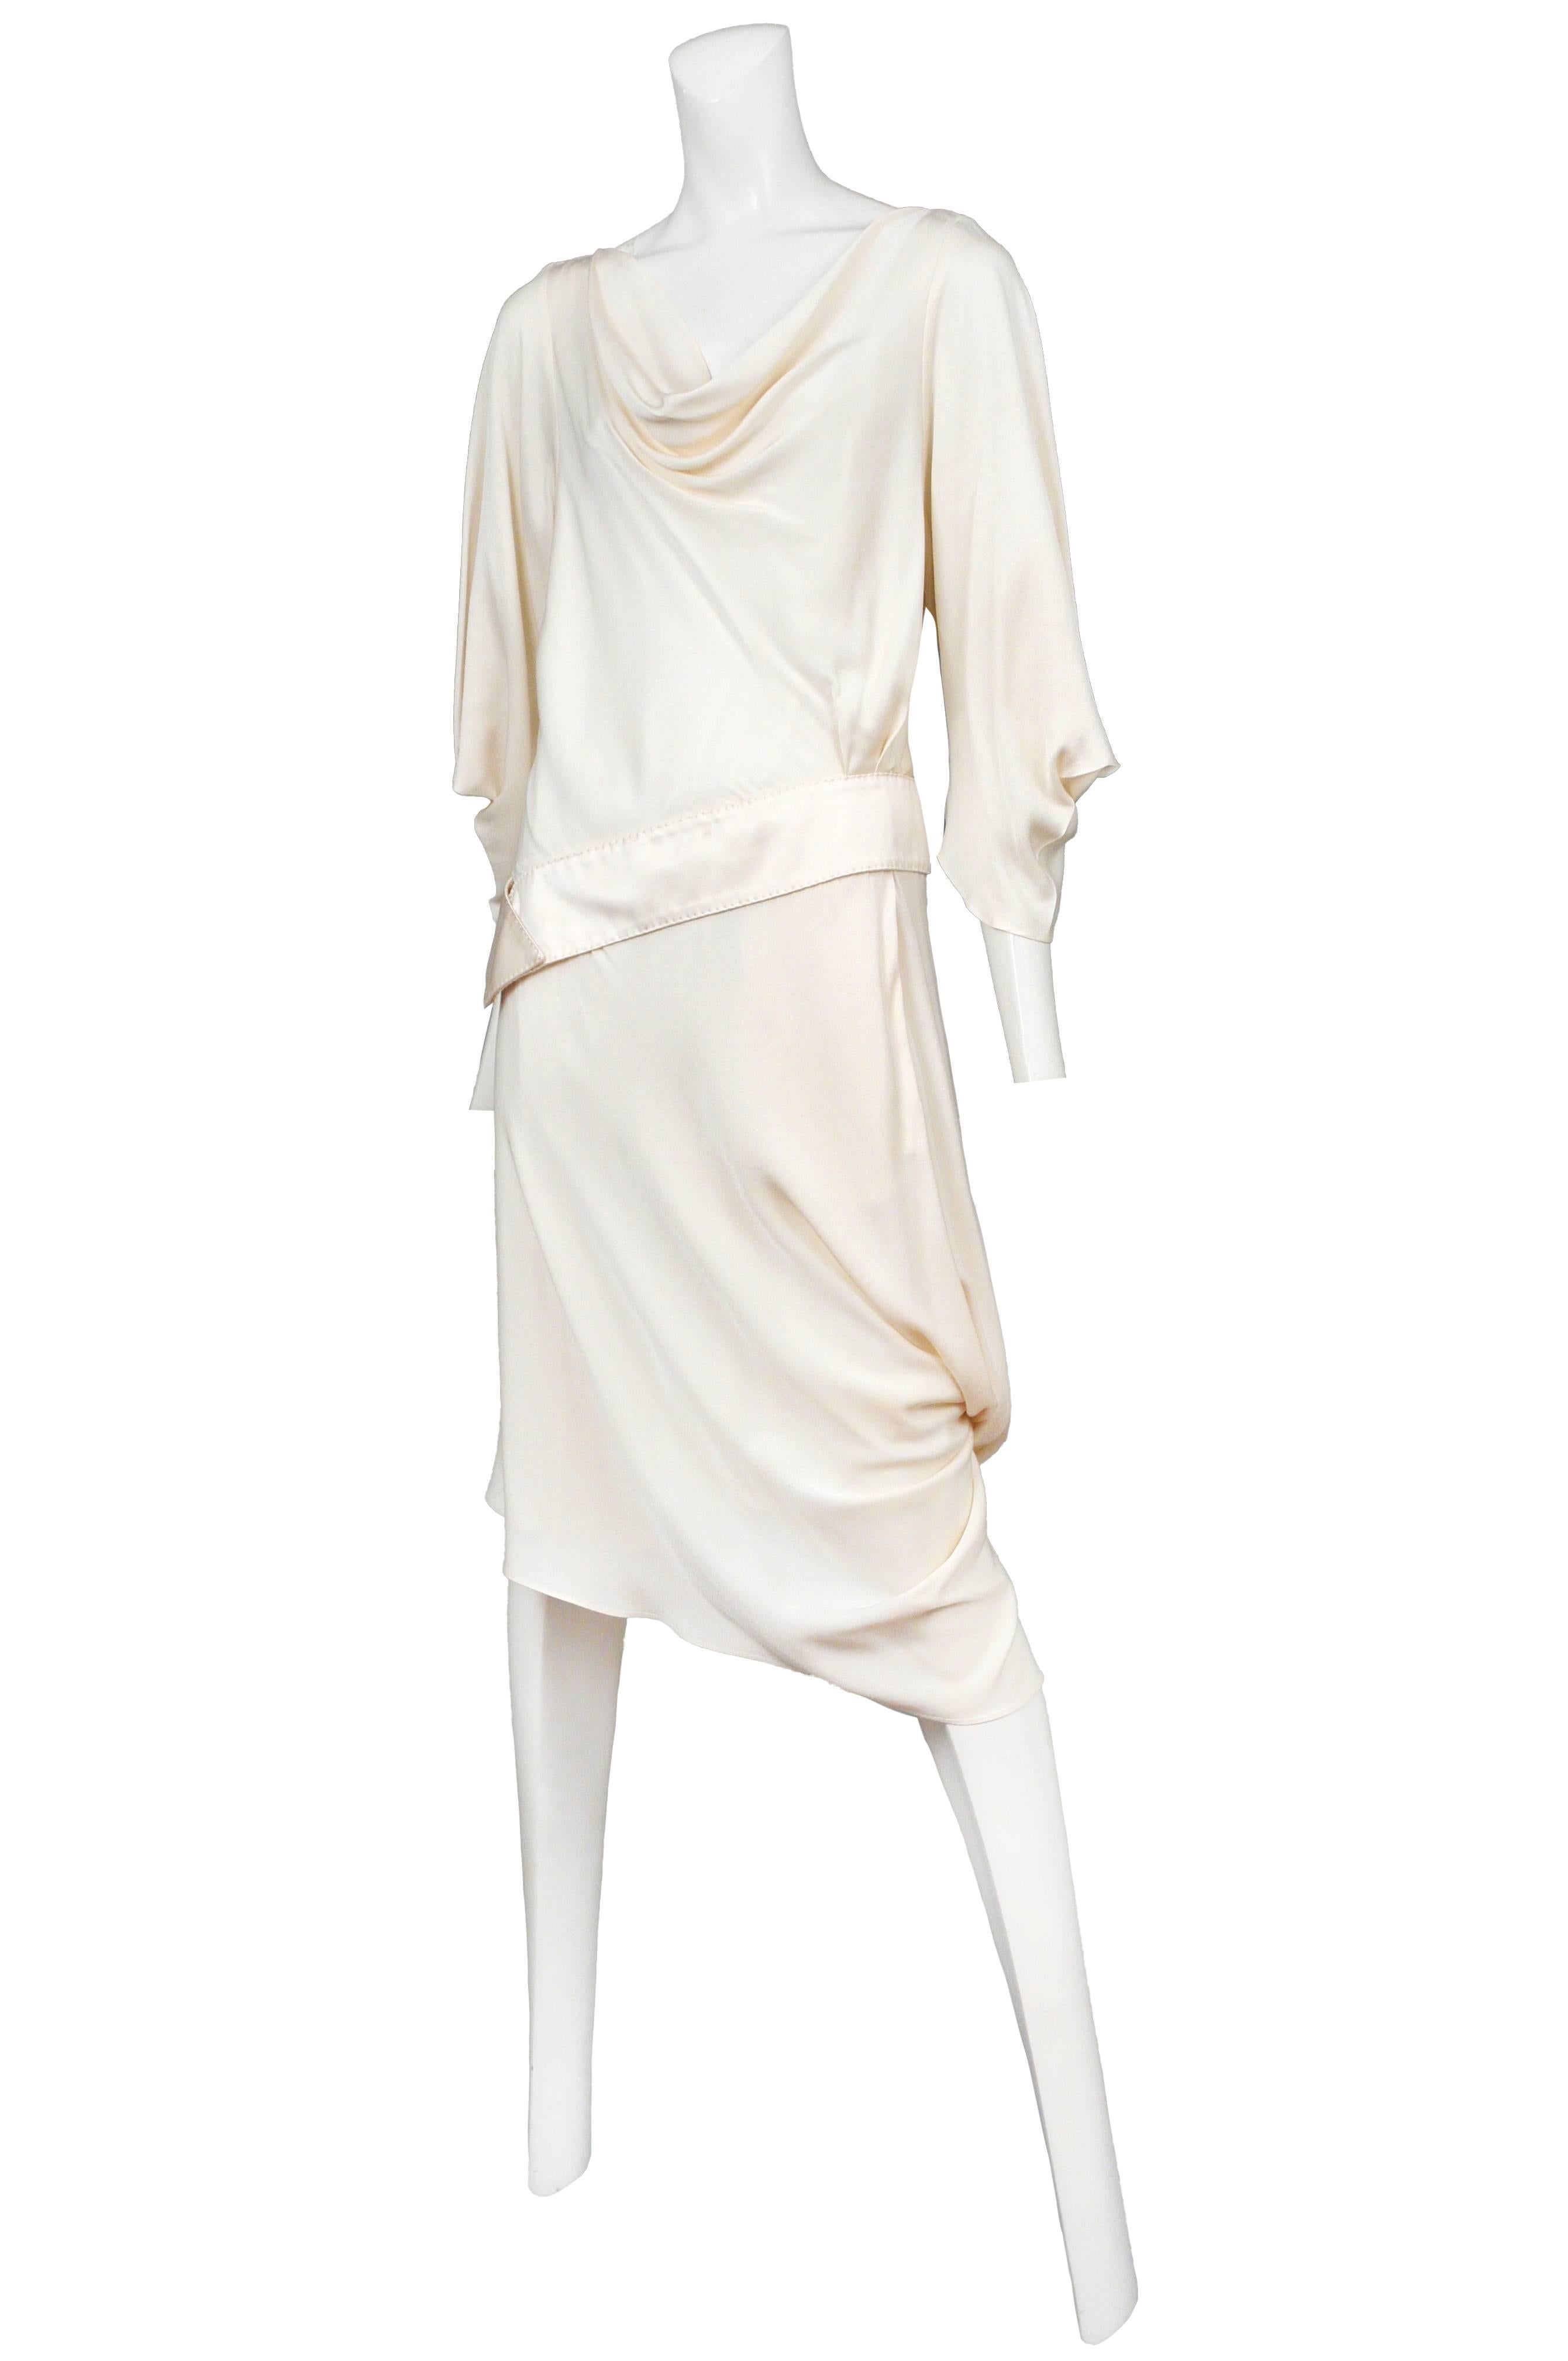 Off white kimonoesque dress with asymmetrical sash, draped skirt and bubble hem. Circa 2007.